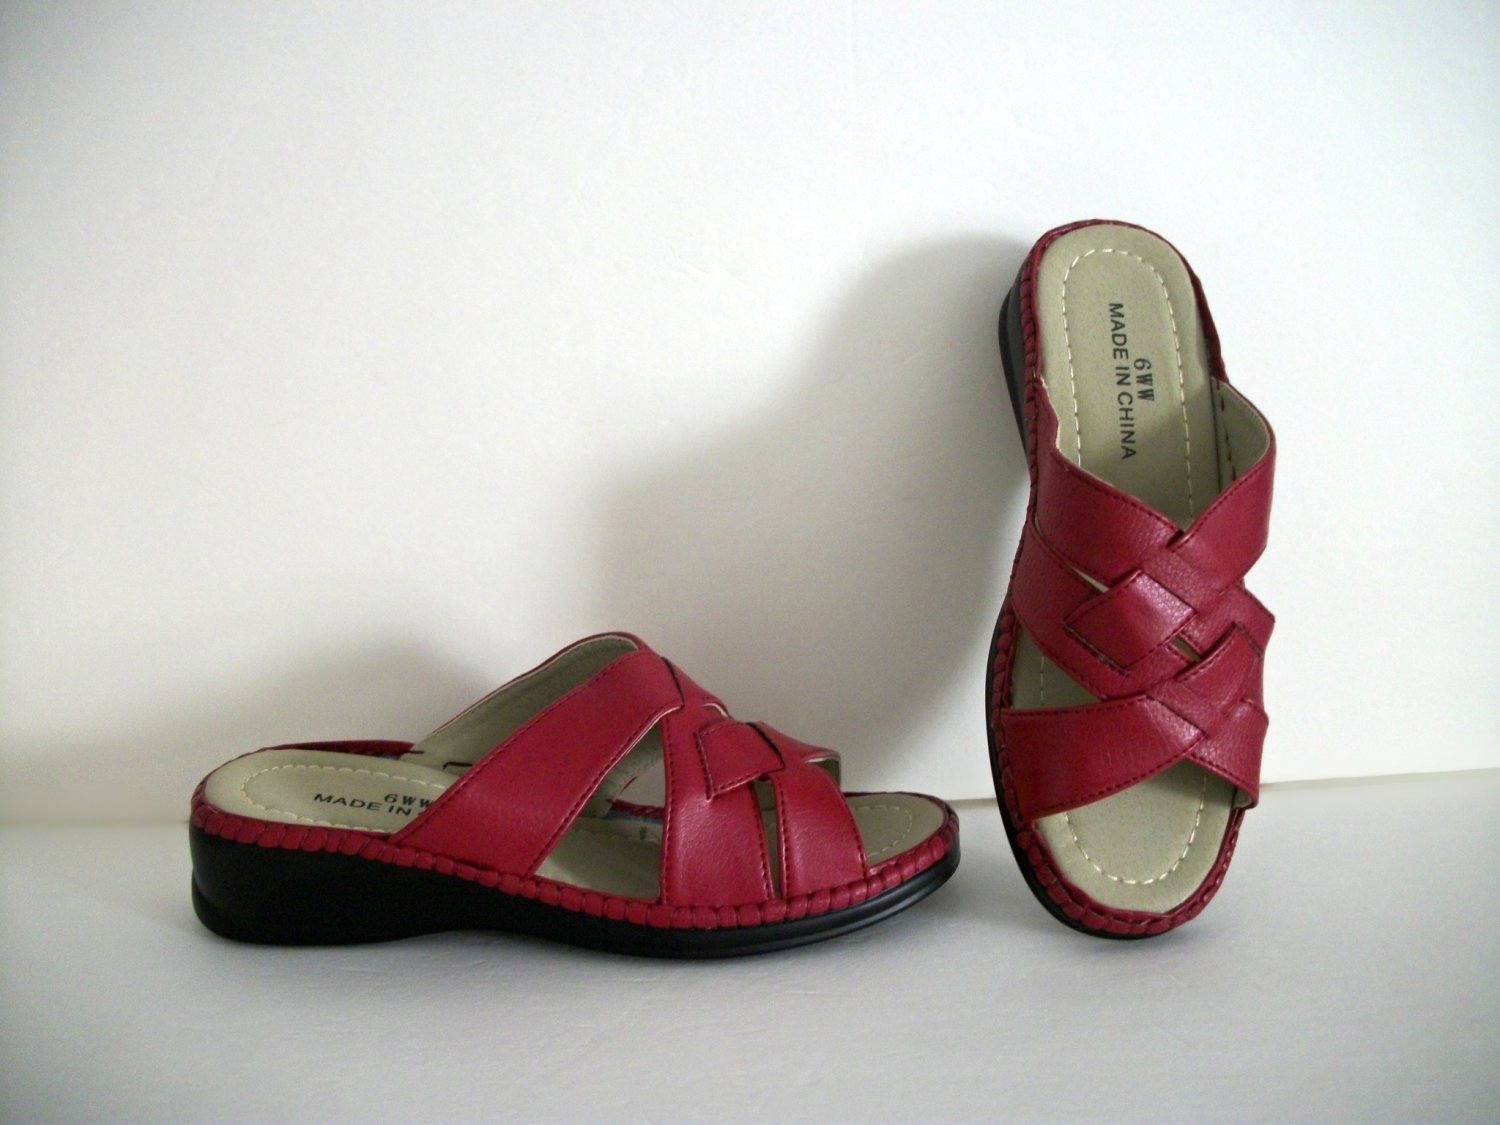 Hilary Red Slide Sandals Shoe Size 6WW